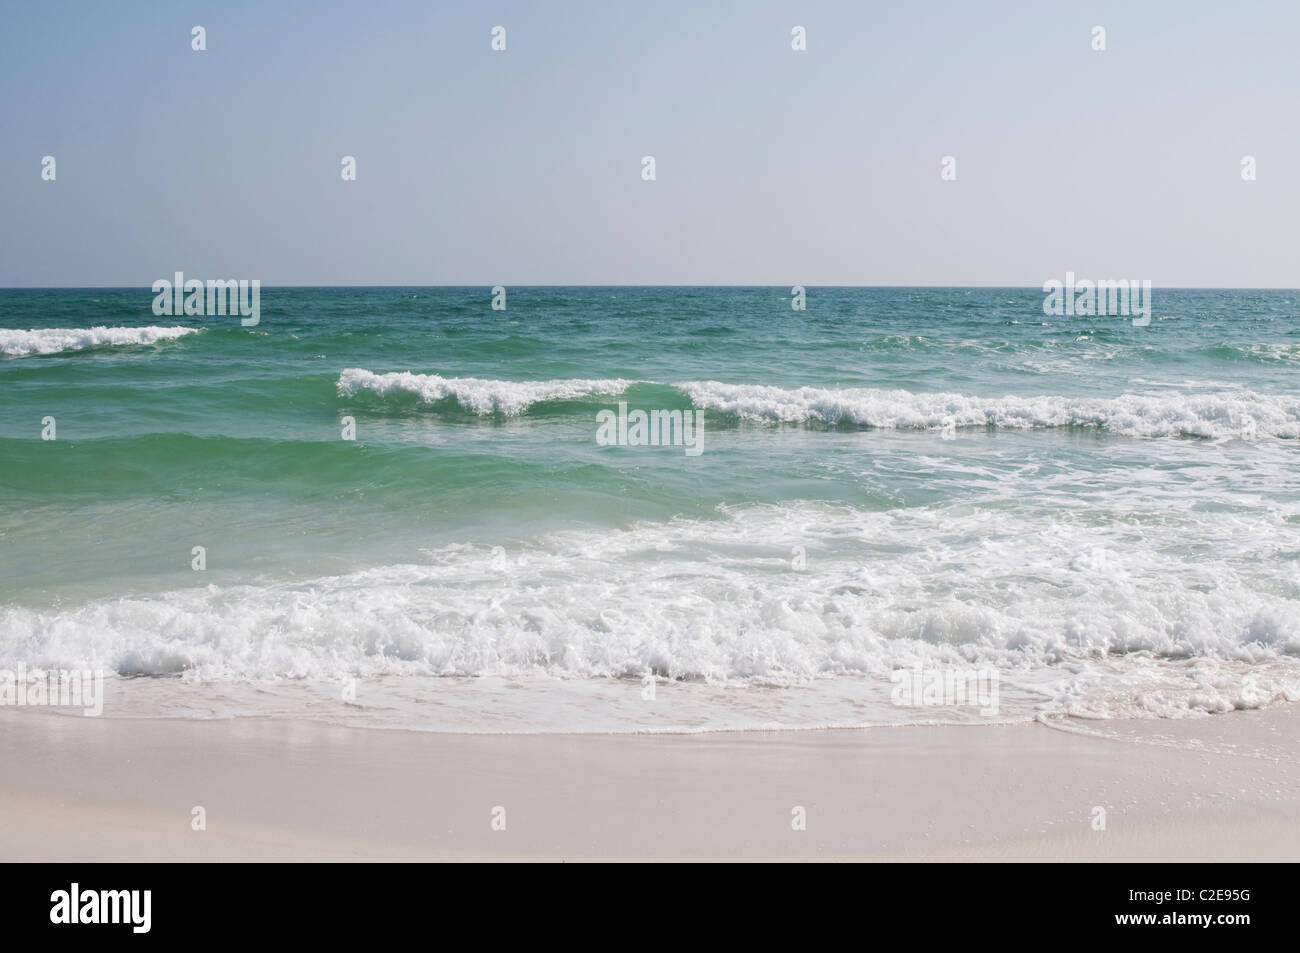 Der Golf von Mexiko bei Rosemary Beach, FL. Rosemary Beach gehört Walton County entlang der Florida Panhandle. Stockfoto